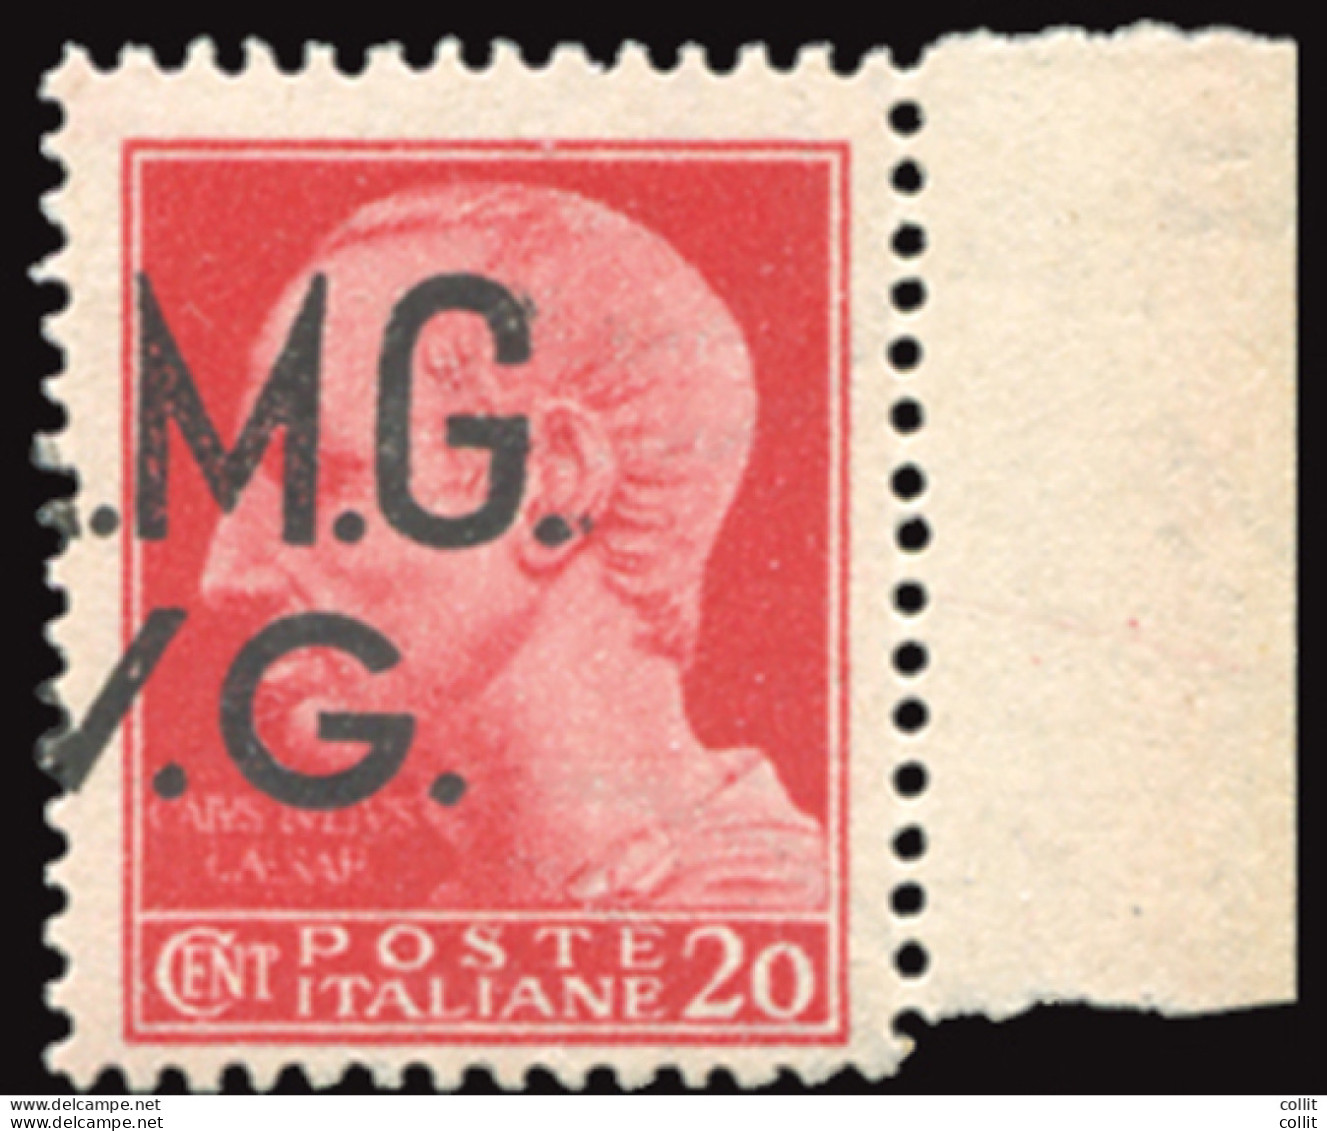 AMG. VG. - Cent. 20 Varietà Soprastampa Solo M.G./V.G. - Nuovi